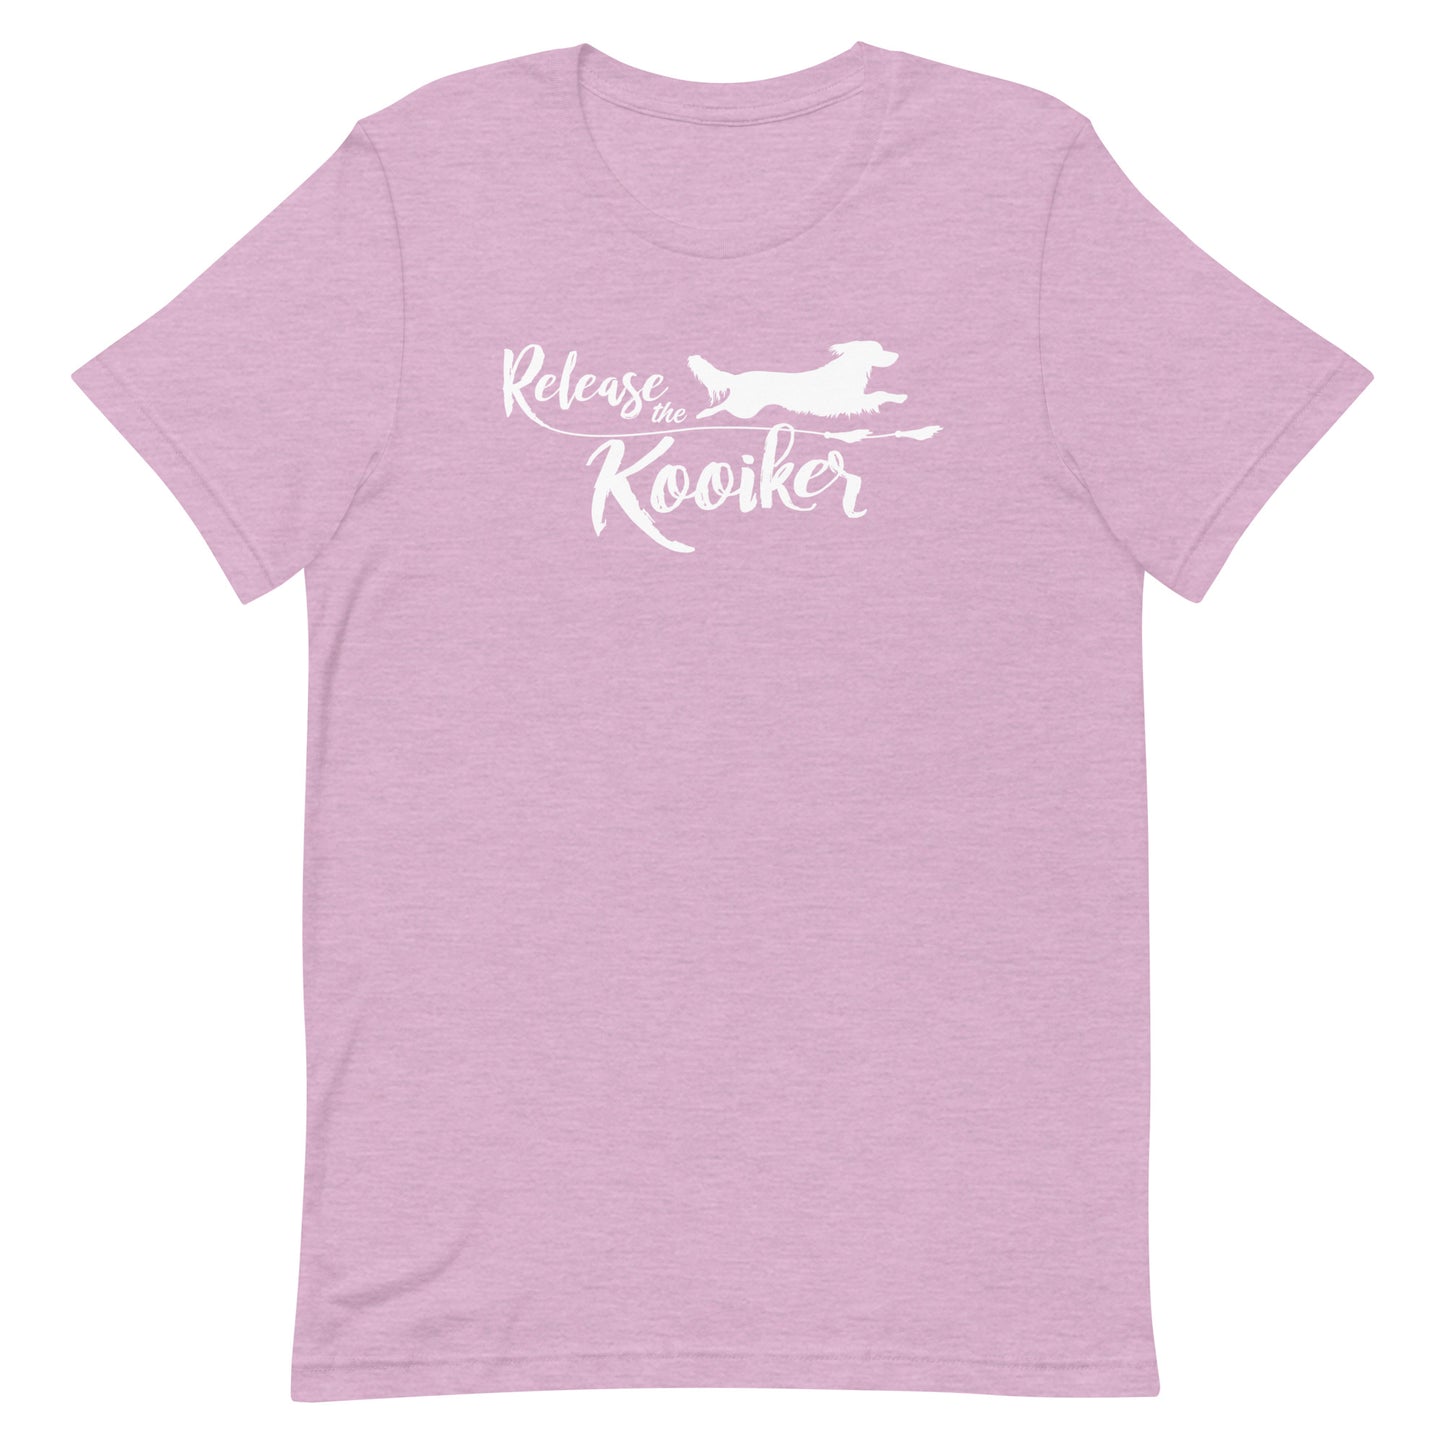 RELEASE THE KOOIKER - Unisex t-shirt